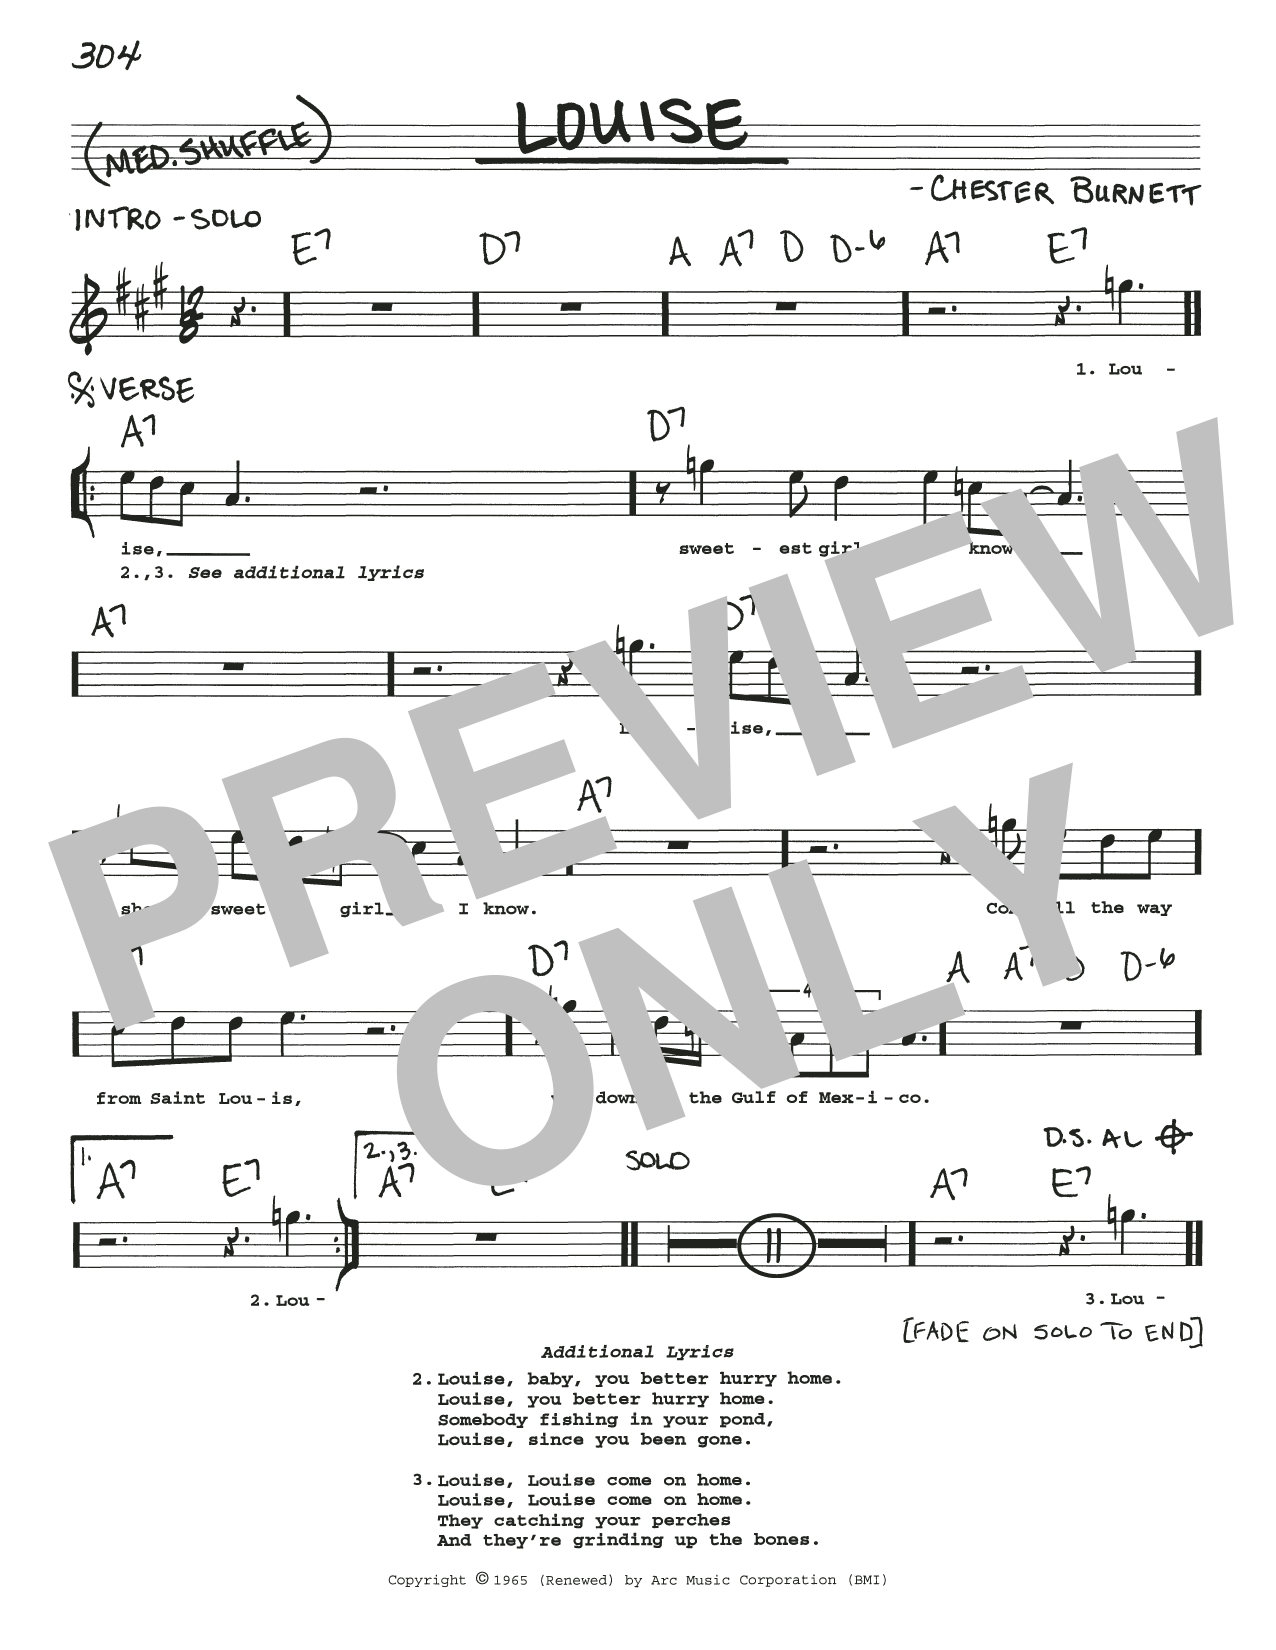 John Lee Hooker Louise Sheet Music Notes & Chords for Real Book – Melody, Lyrics & Chords - Download or Print PDF